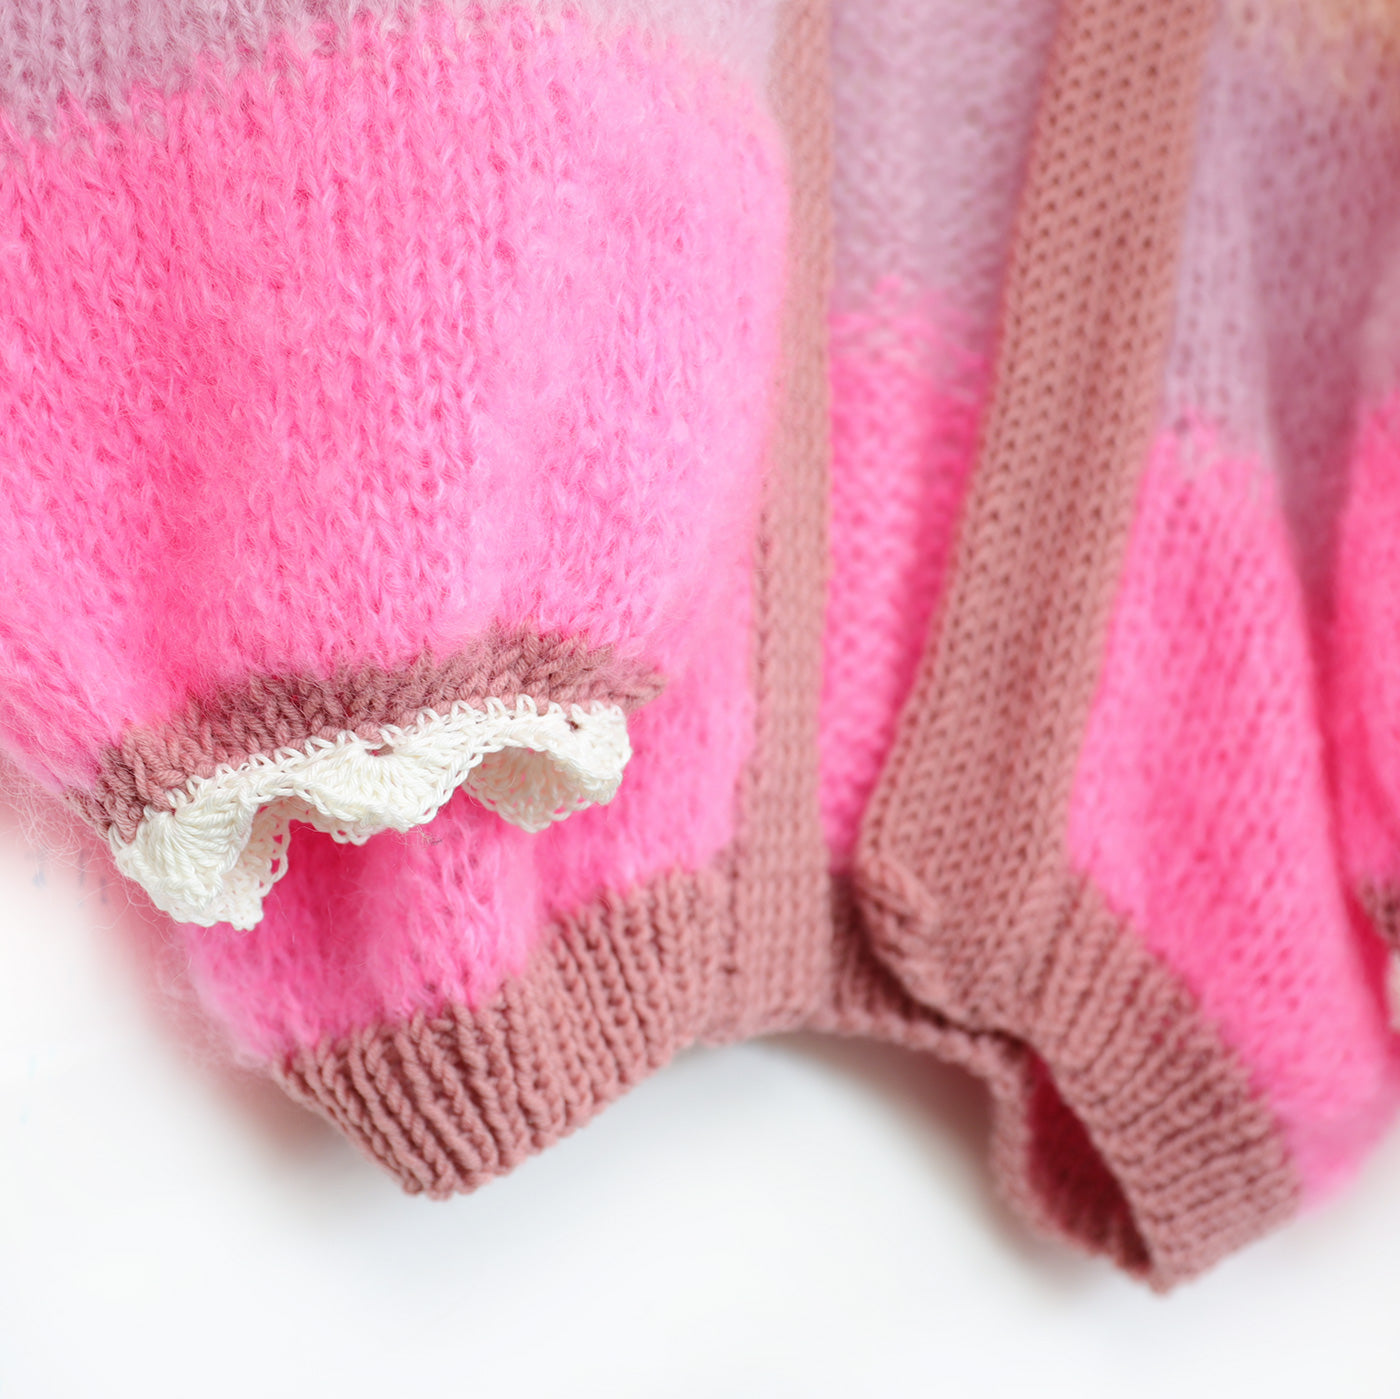 Knit pattern – MYPZ Light Mohair Cardigan Sugar Pop No.9 (ENG-NL)